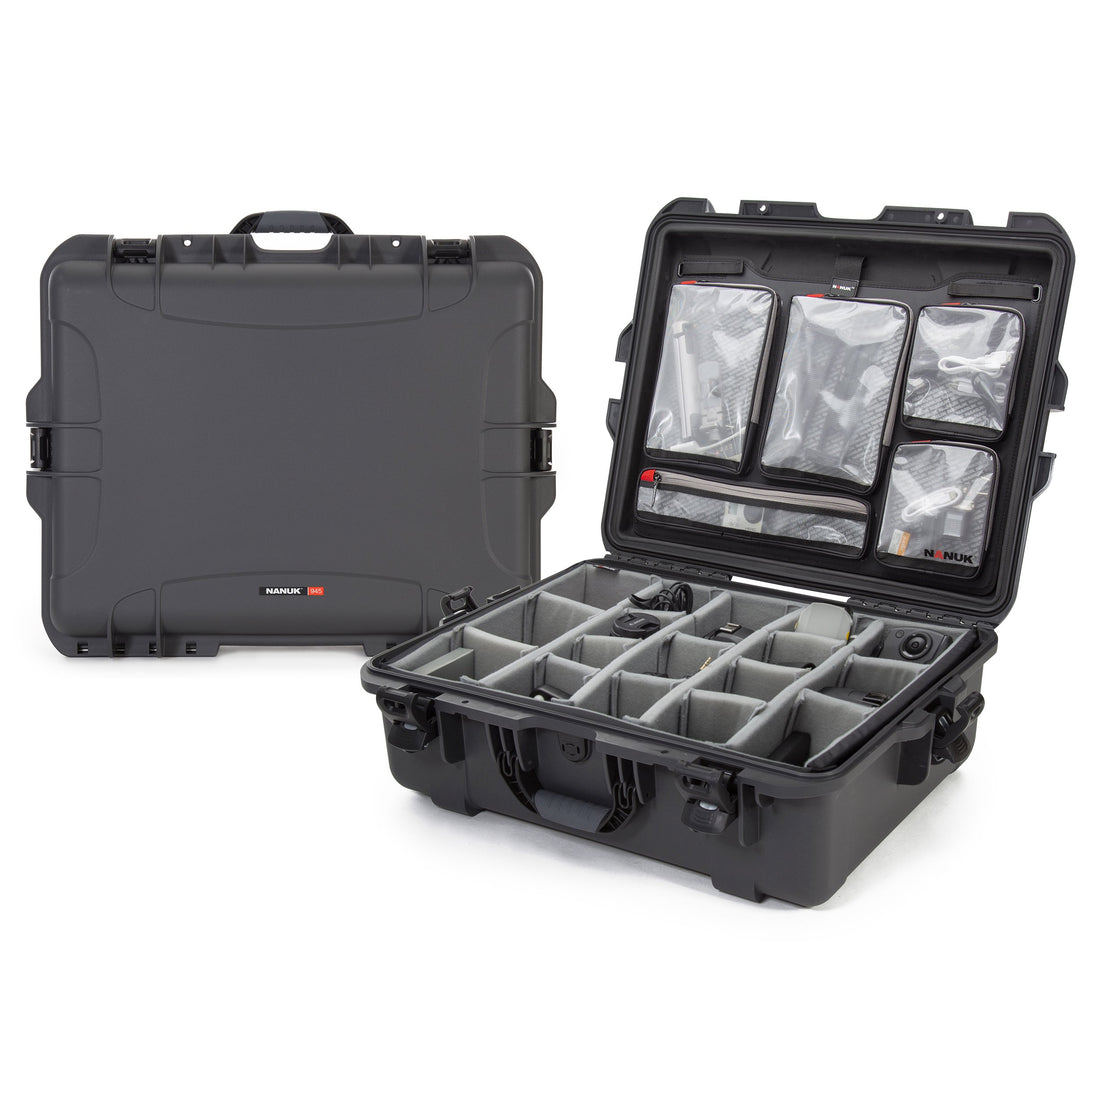 nanuk 940 ronin m waterproof hard case with custom foam insert for dji ronin m gimbal stabilizer system black